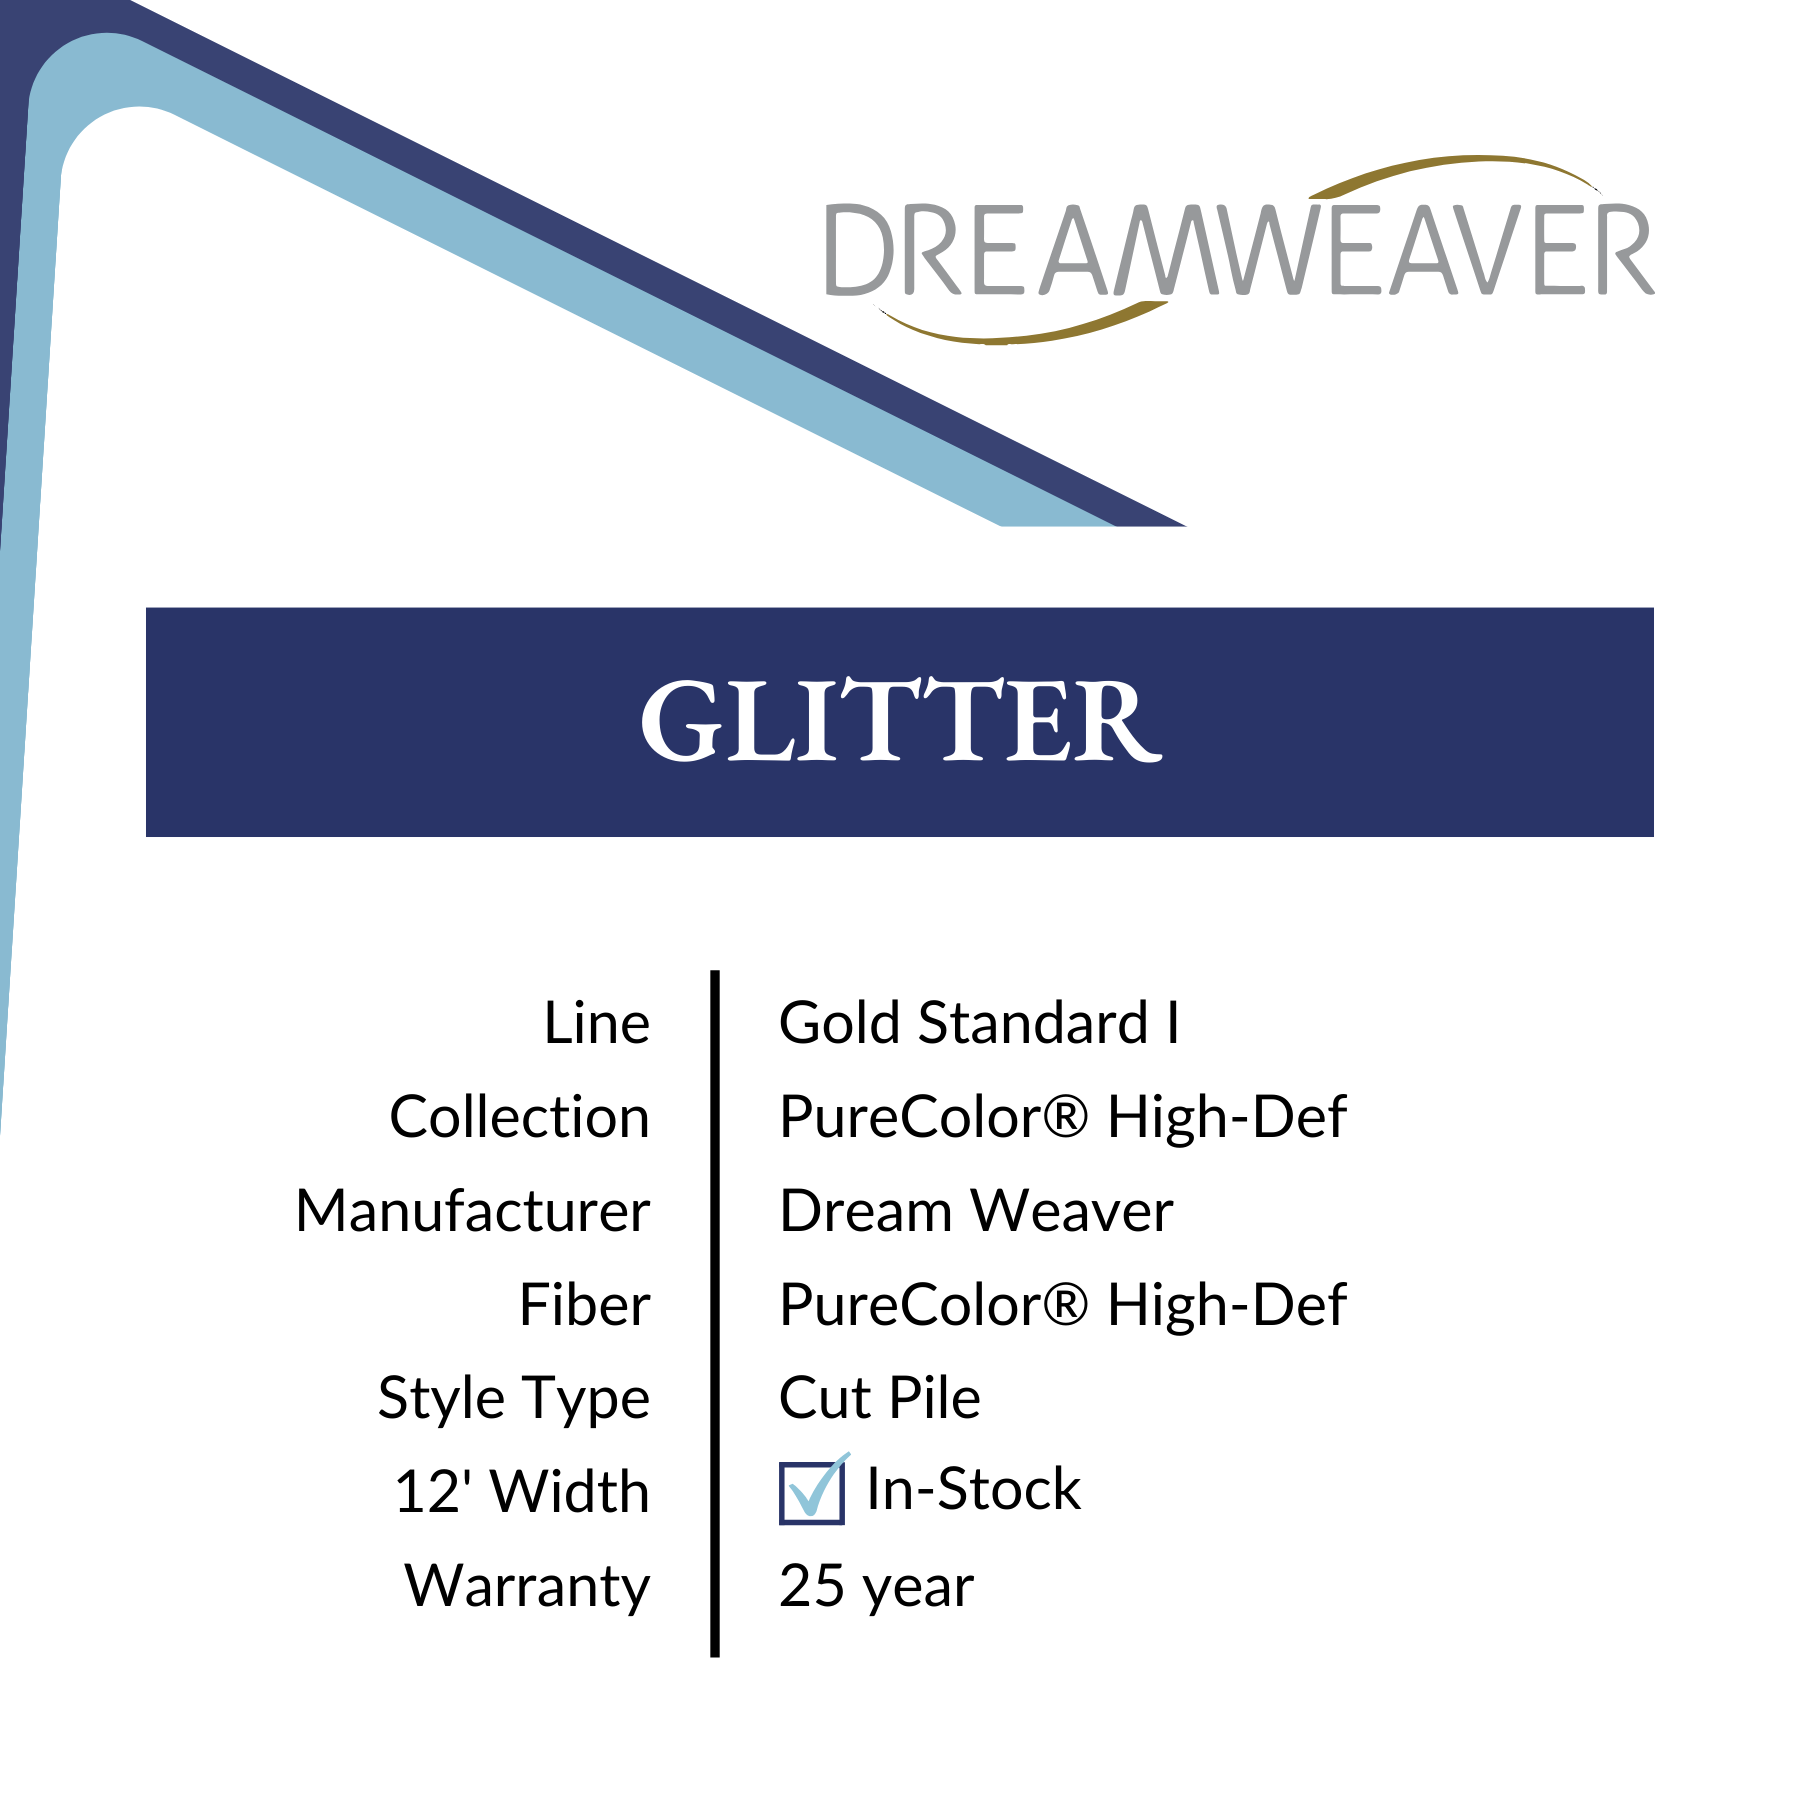 Glitter, Gold Standard I, Carpet by Dreamweaver, Calhoun's Flooring Springfield, IL